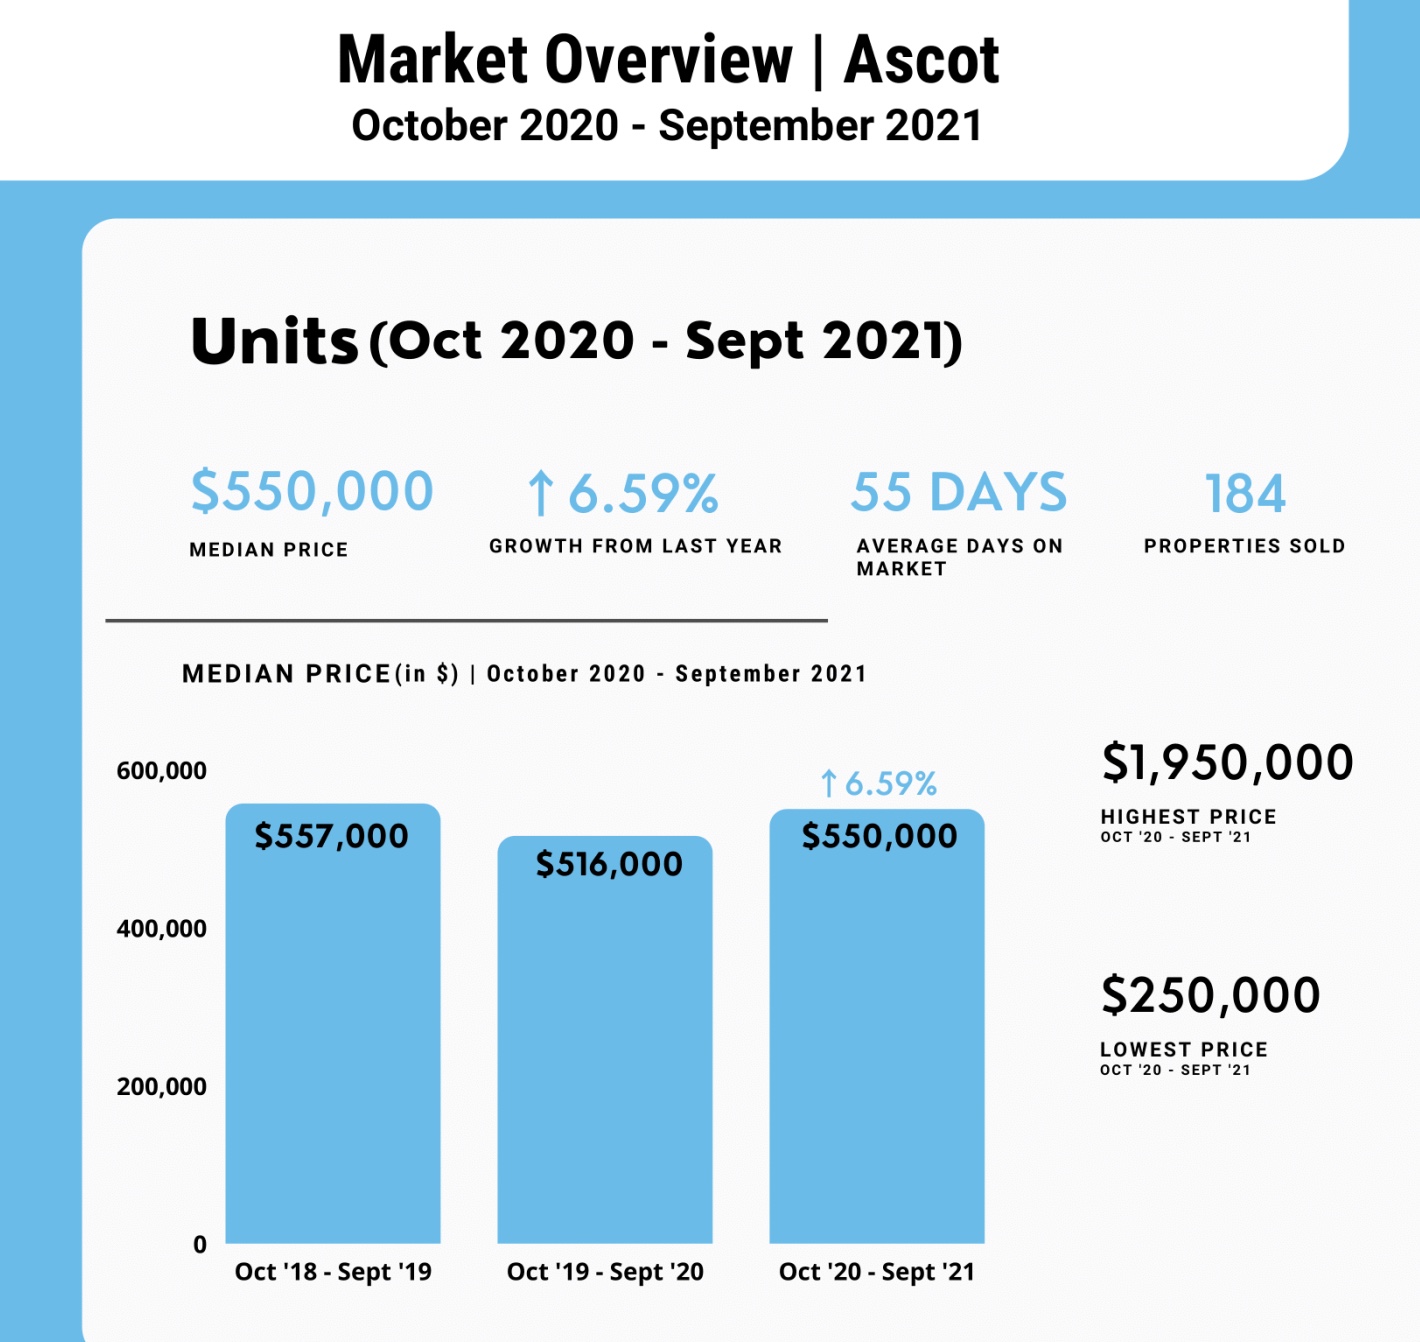 Ascot Market Overview Units